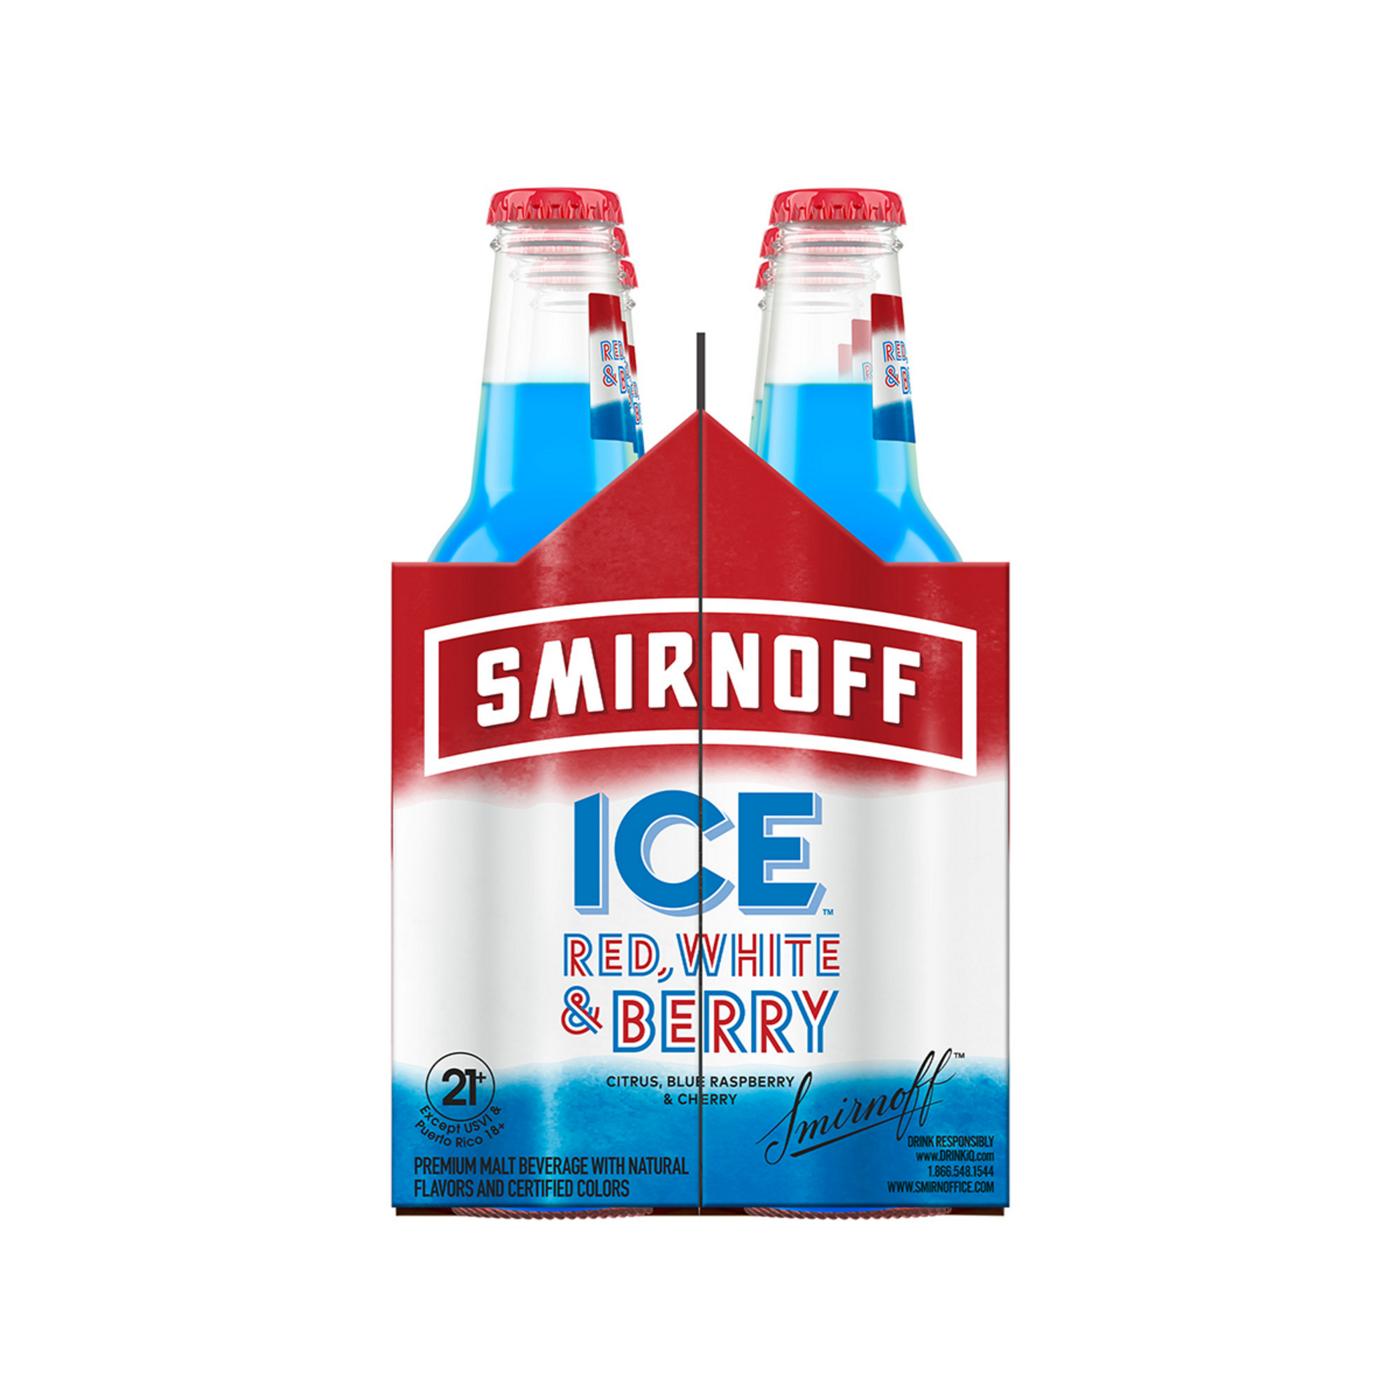 Smirnoff Ice Red, White, Berry; image 5 of 5